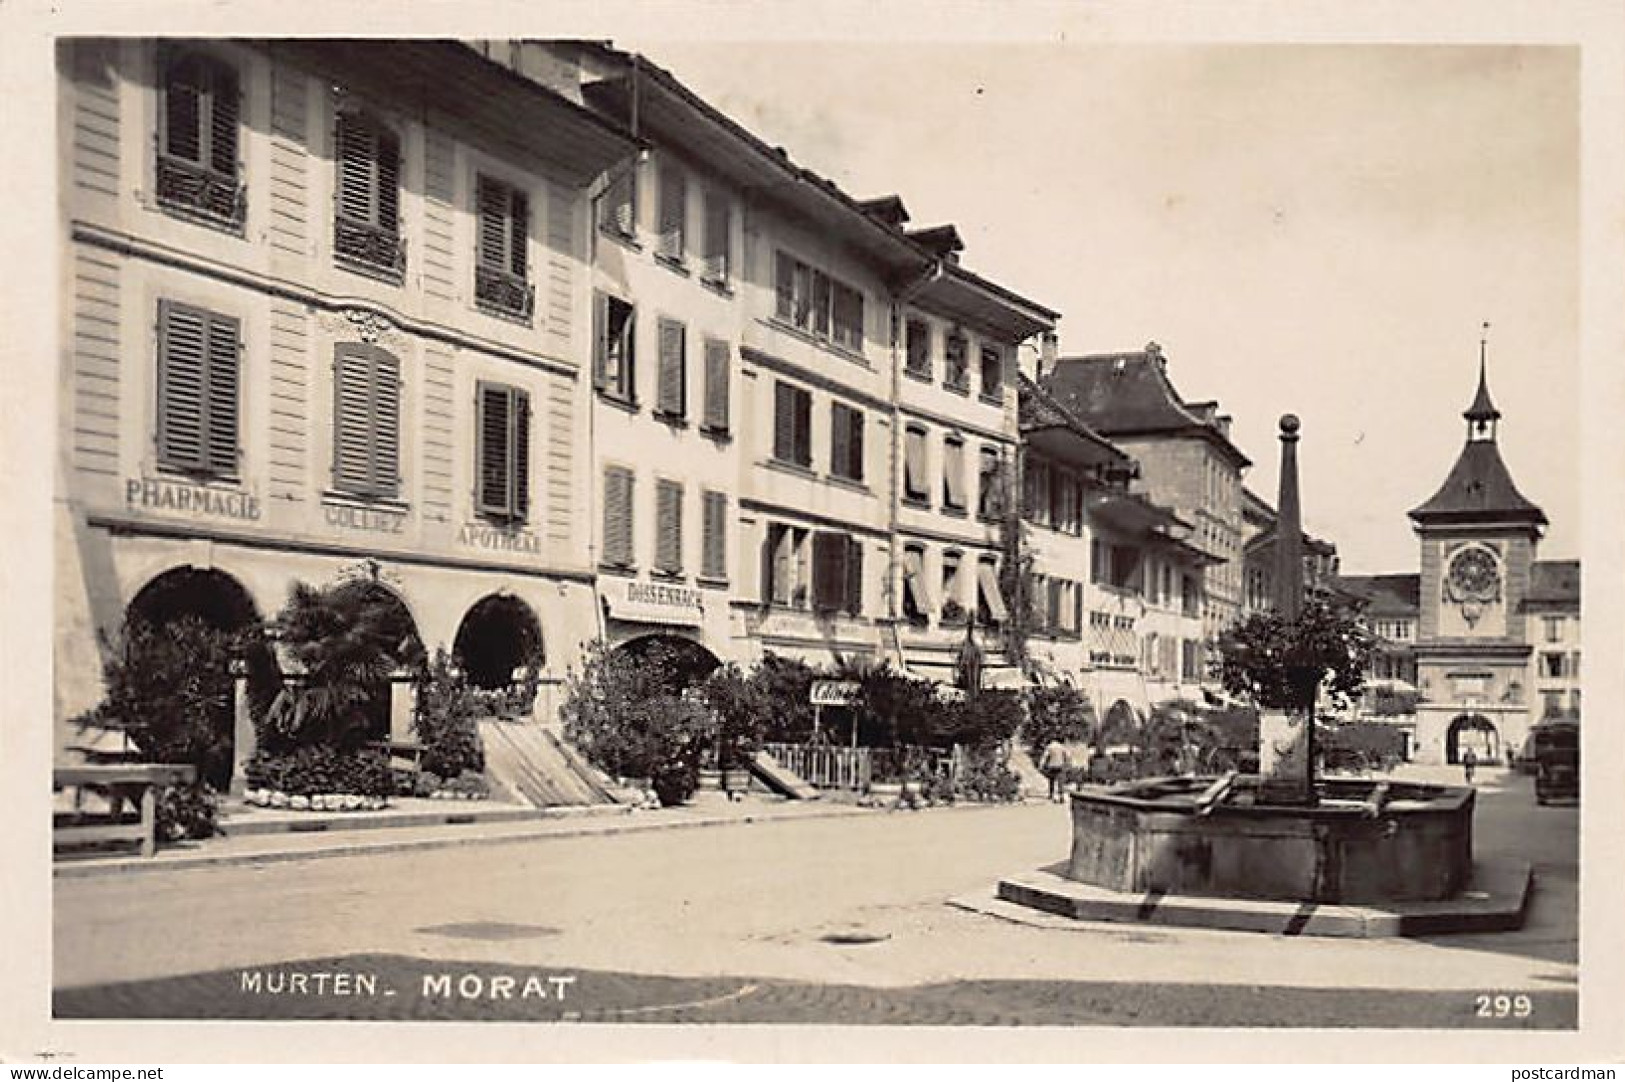 MURTEN MORAT (FR) Pharmacie Colliez, Place Principale - Ed. C.P.N. 299 - Morat